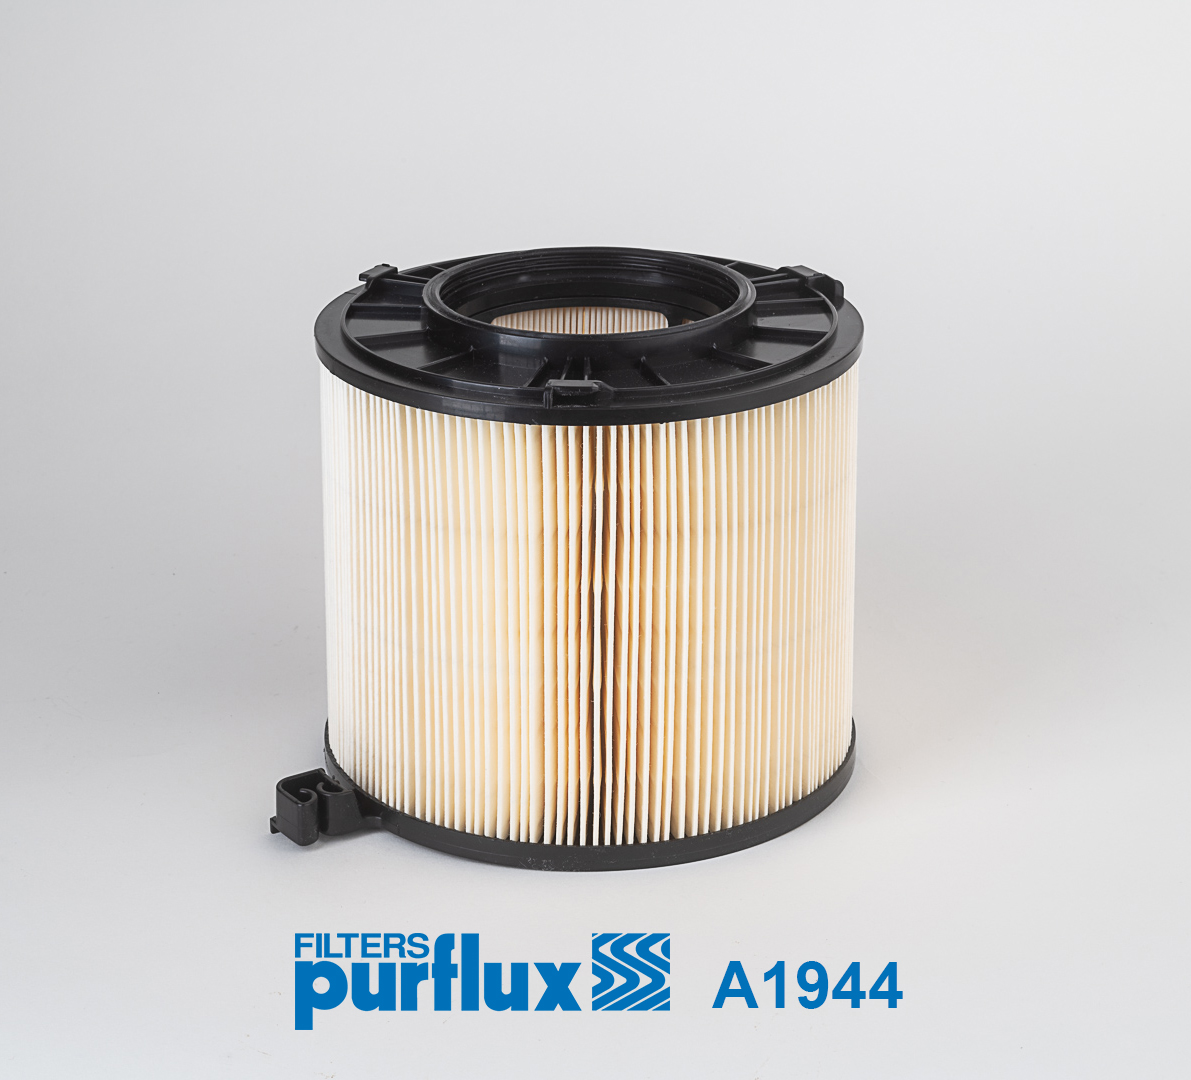 Purflux AH297 filtre cabine 